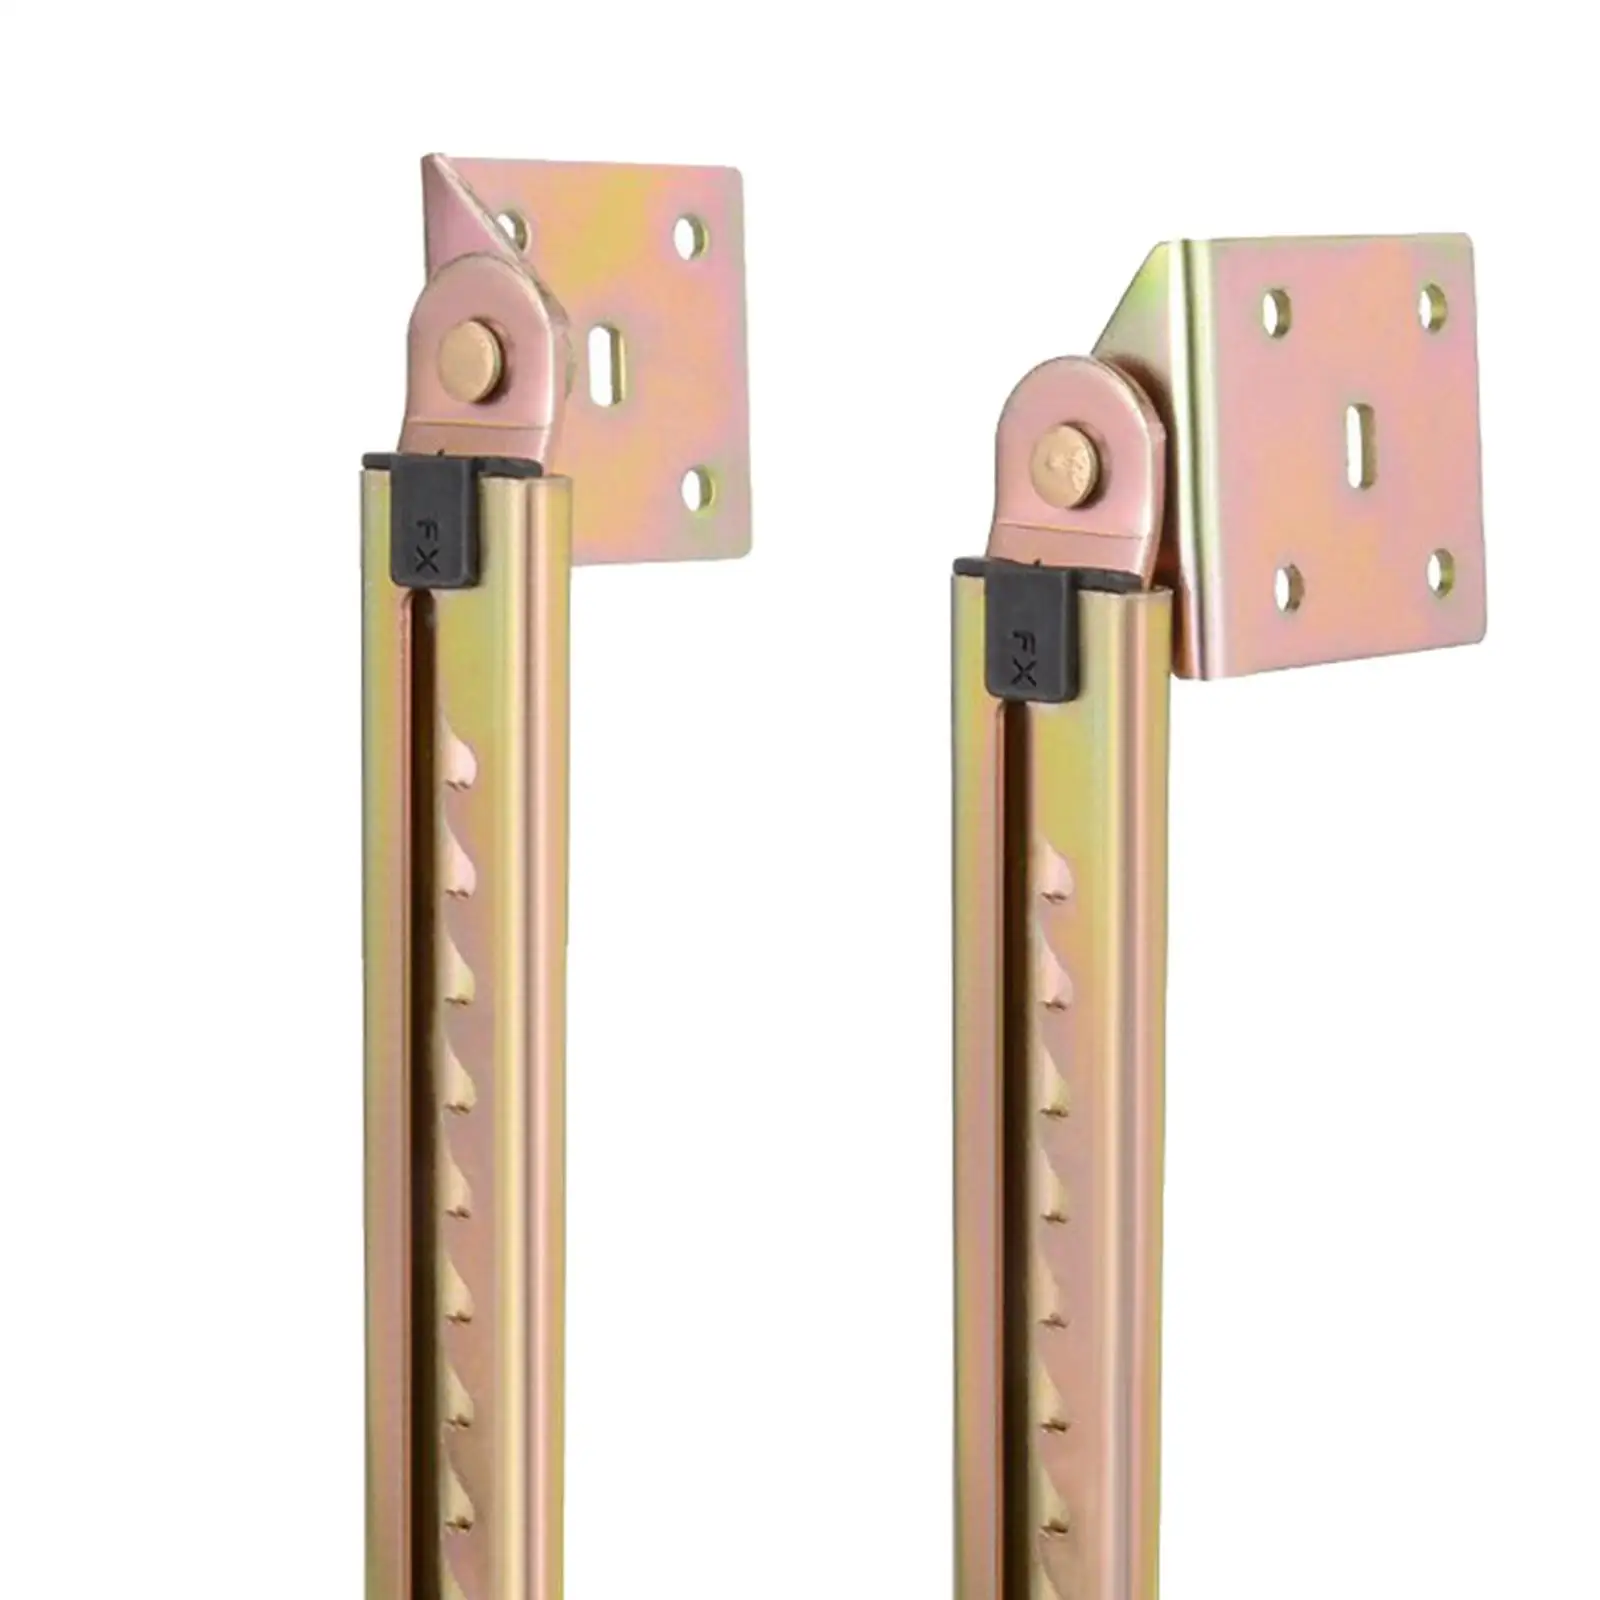 10 Gear Angle Lifting Rod Angle Hinge Hardware Adjustable for DIY Furniture